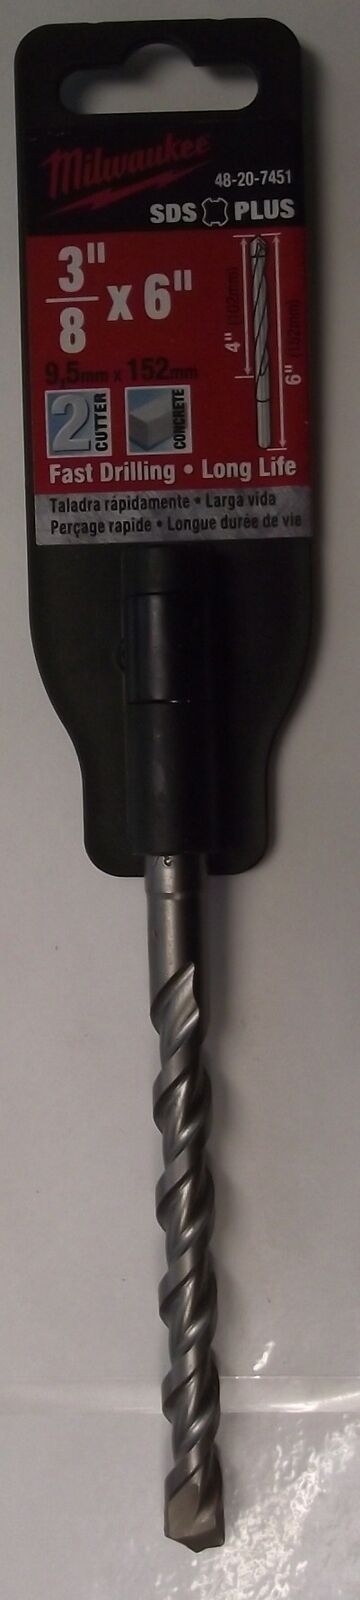 Milwaukee 48-20-7451 SDS+ 3/8" x 4" x 6" 2-Cutter Hammer Drill Bit Germany